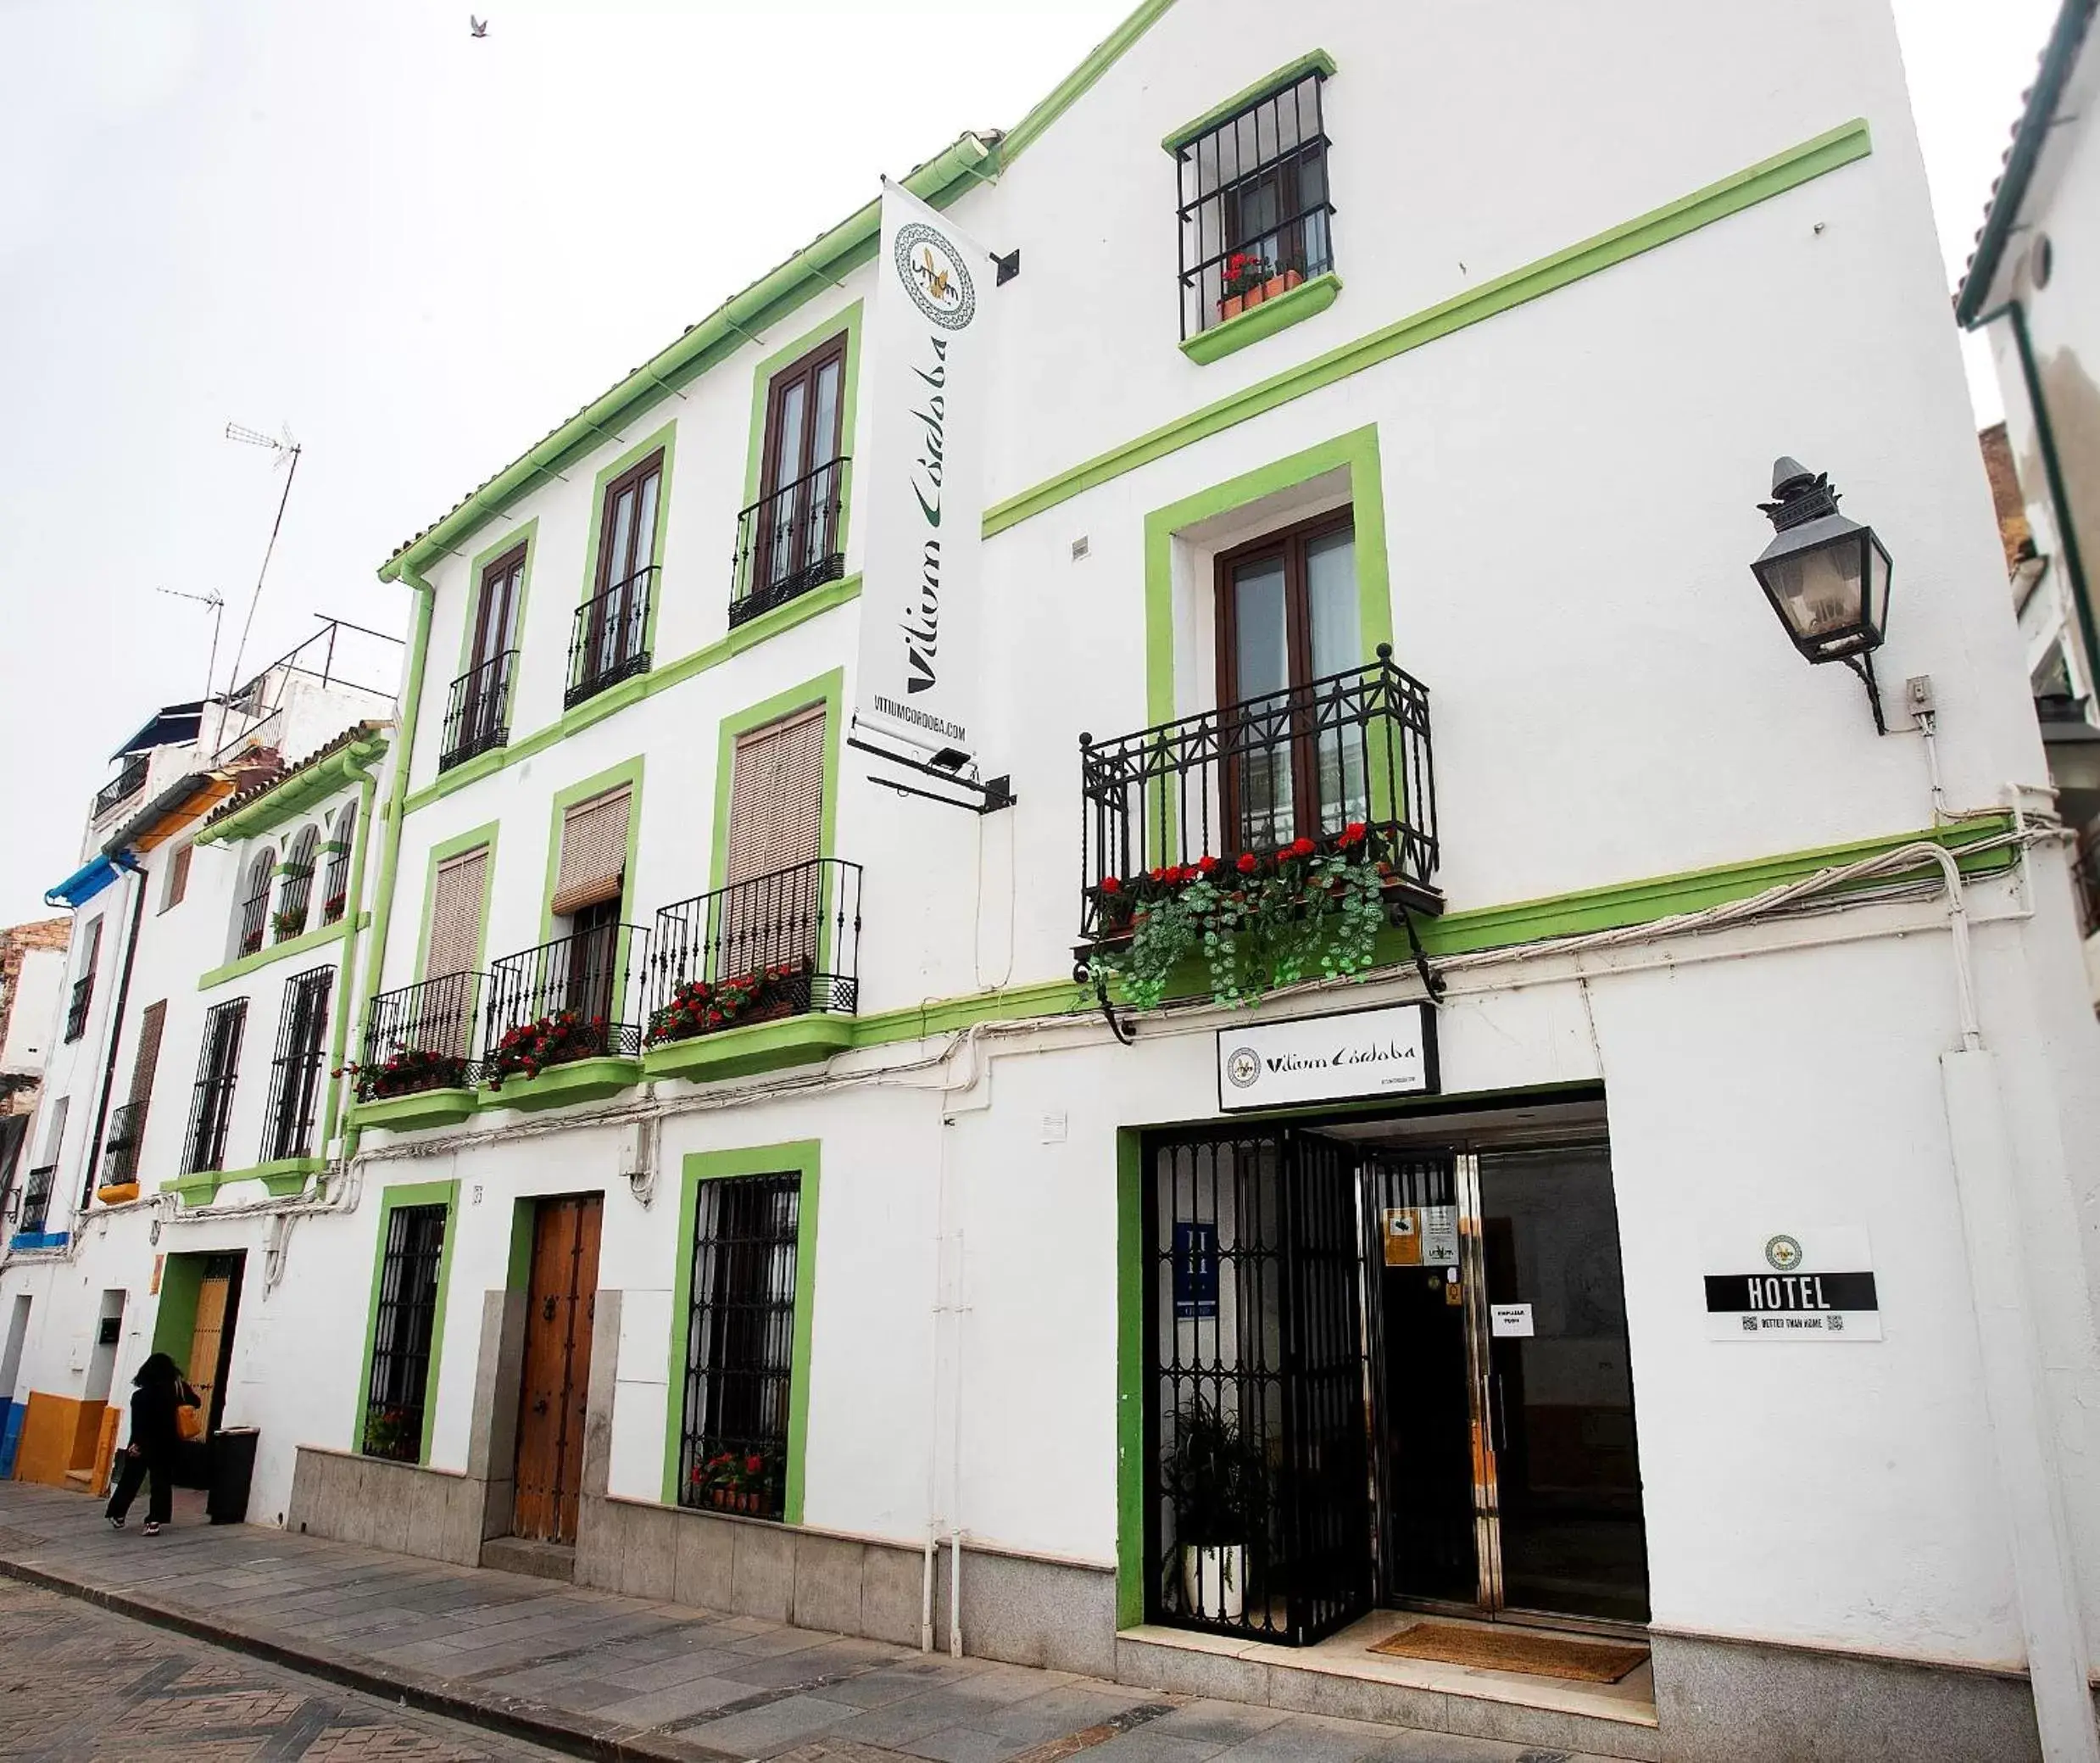 Property Building in Vitium Córdoba